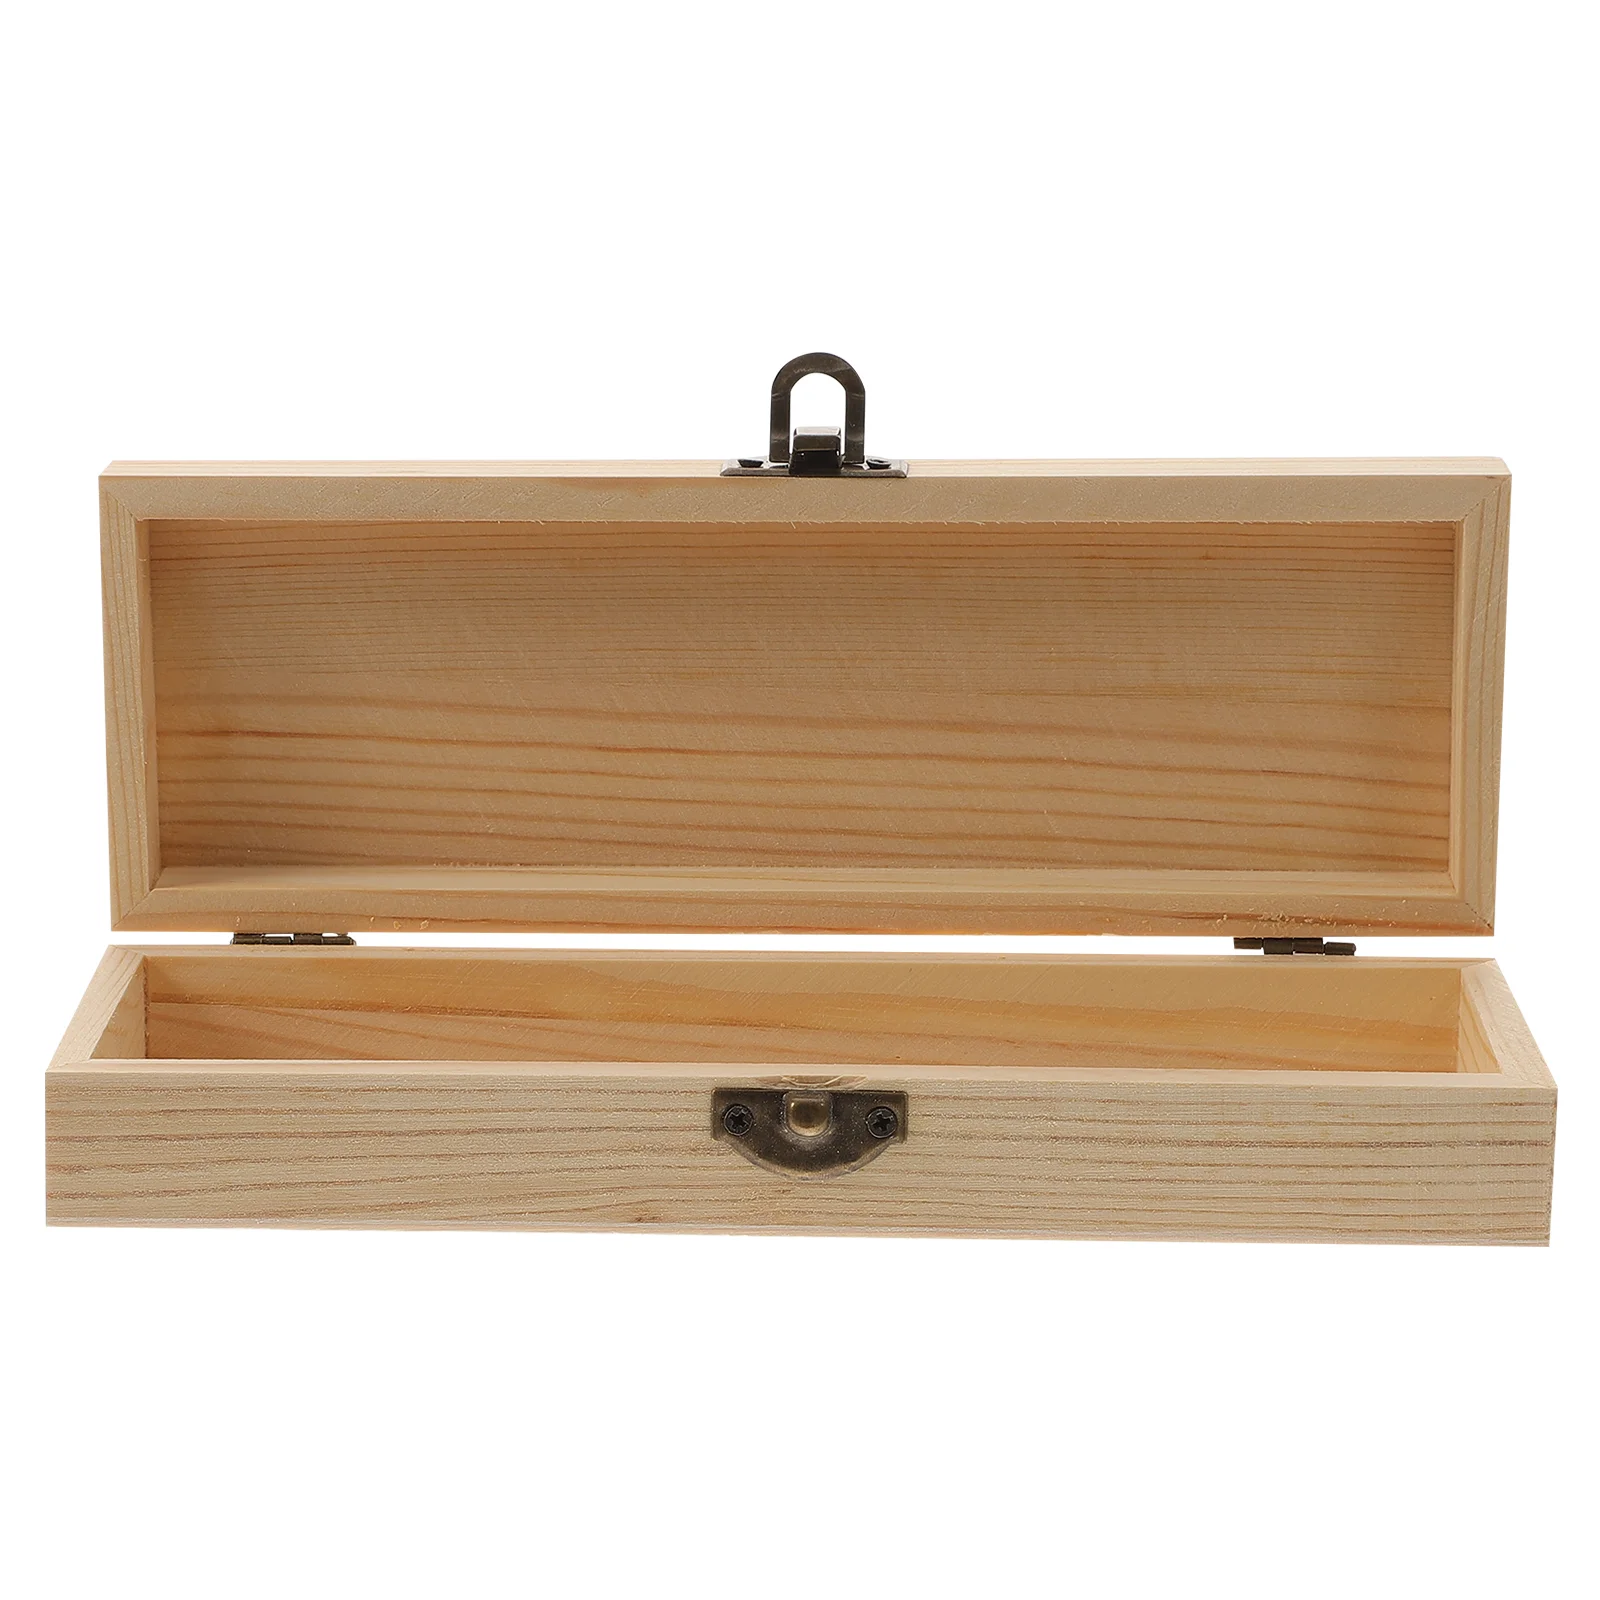 

Plain Unfinished Wooden Pencil Box Unpainted Rectangle Wooden Box Hinged Lid Diy Artist Tool Brush Storage Box Case Locking